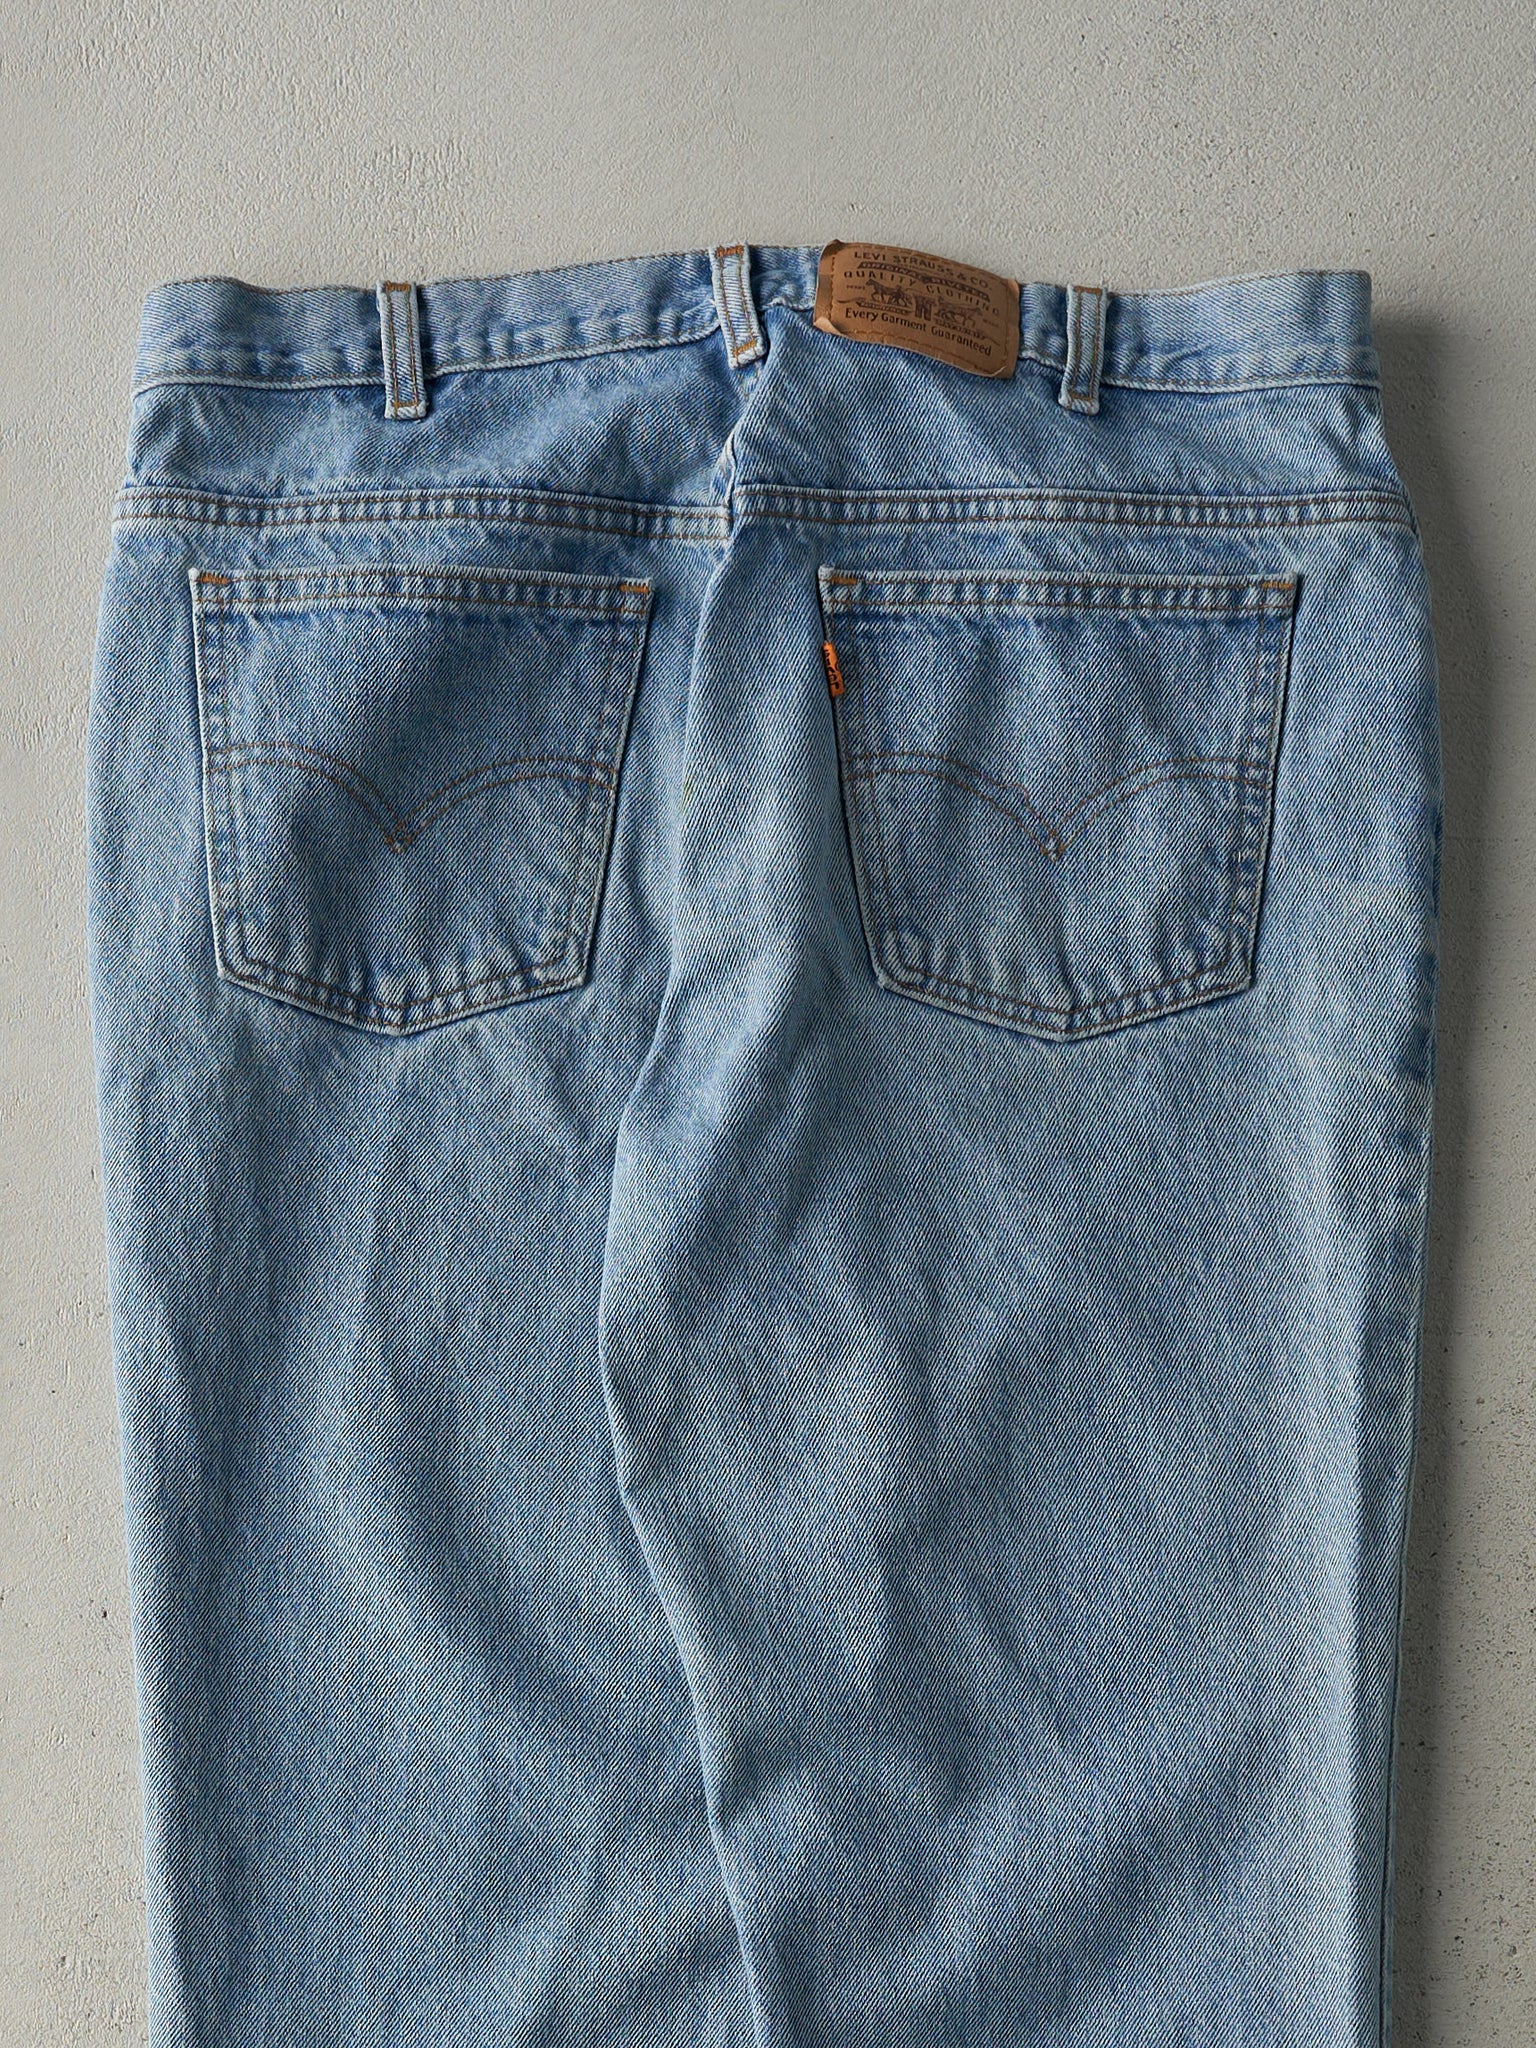 Vintage 90s Light Wash Levi's Orange Tab Jeans (34x33.5)